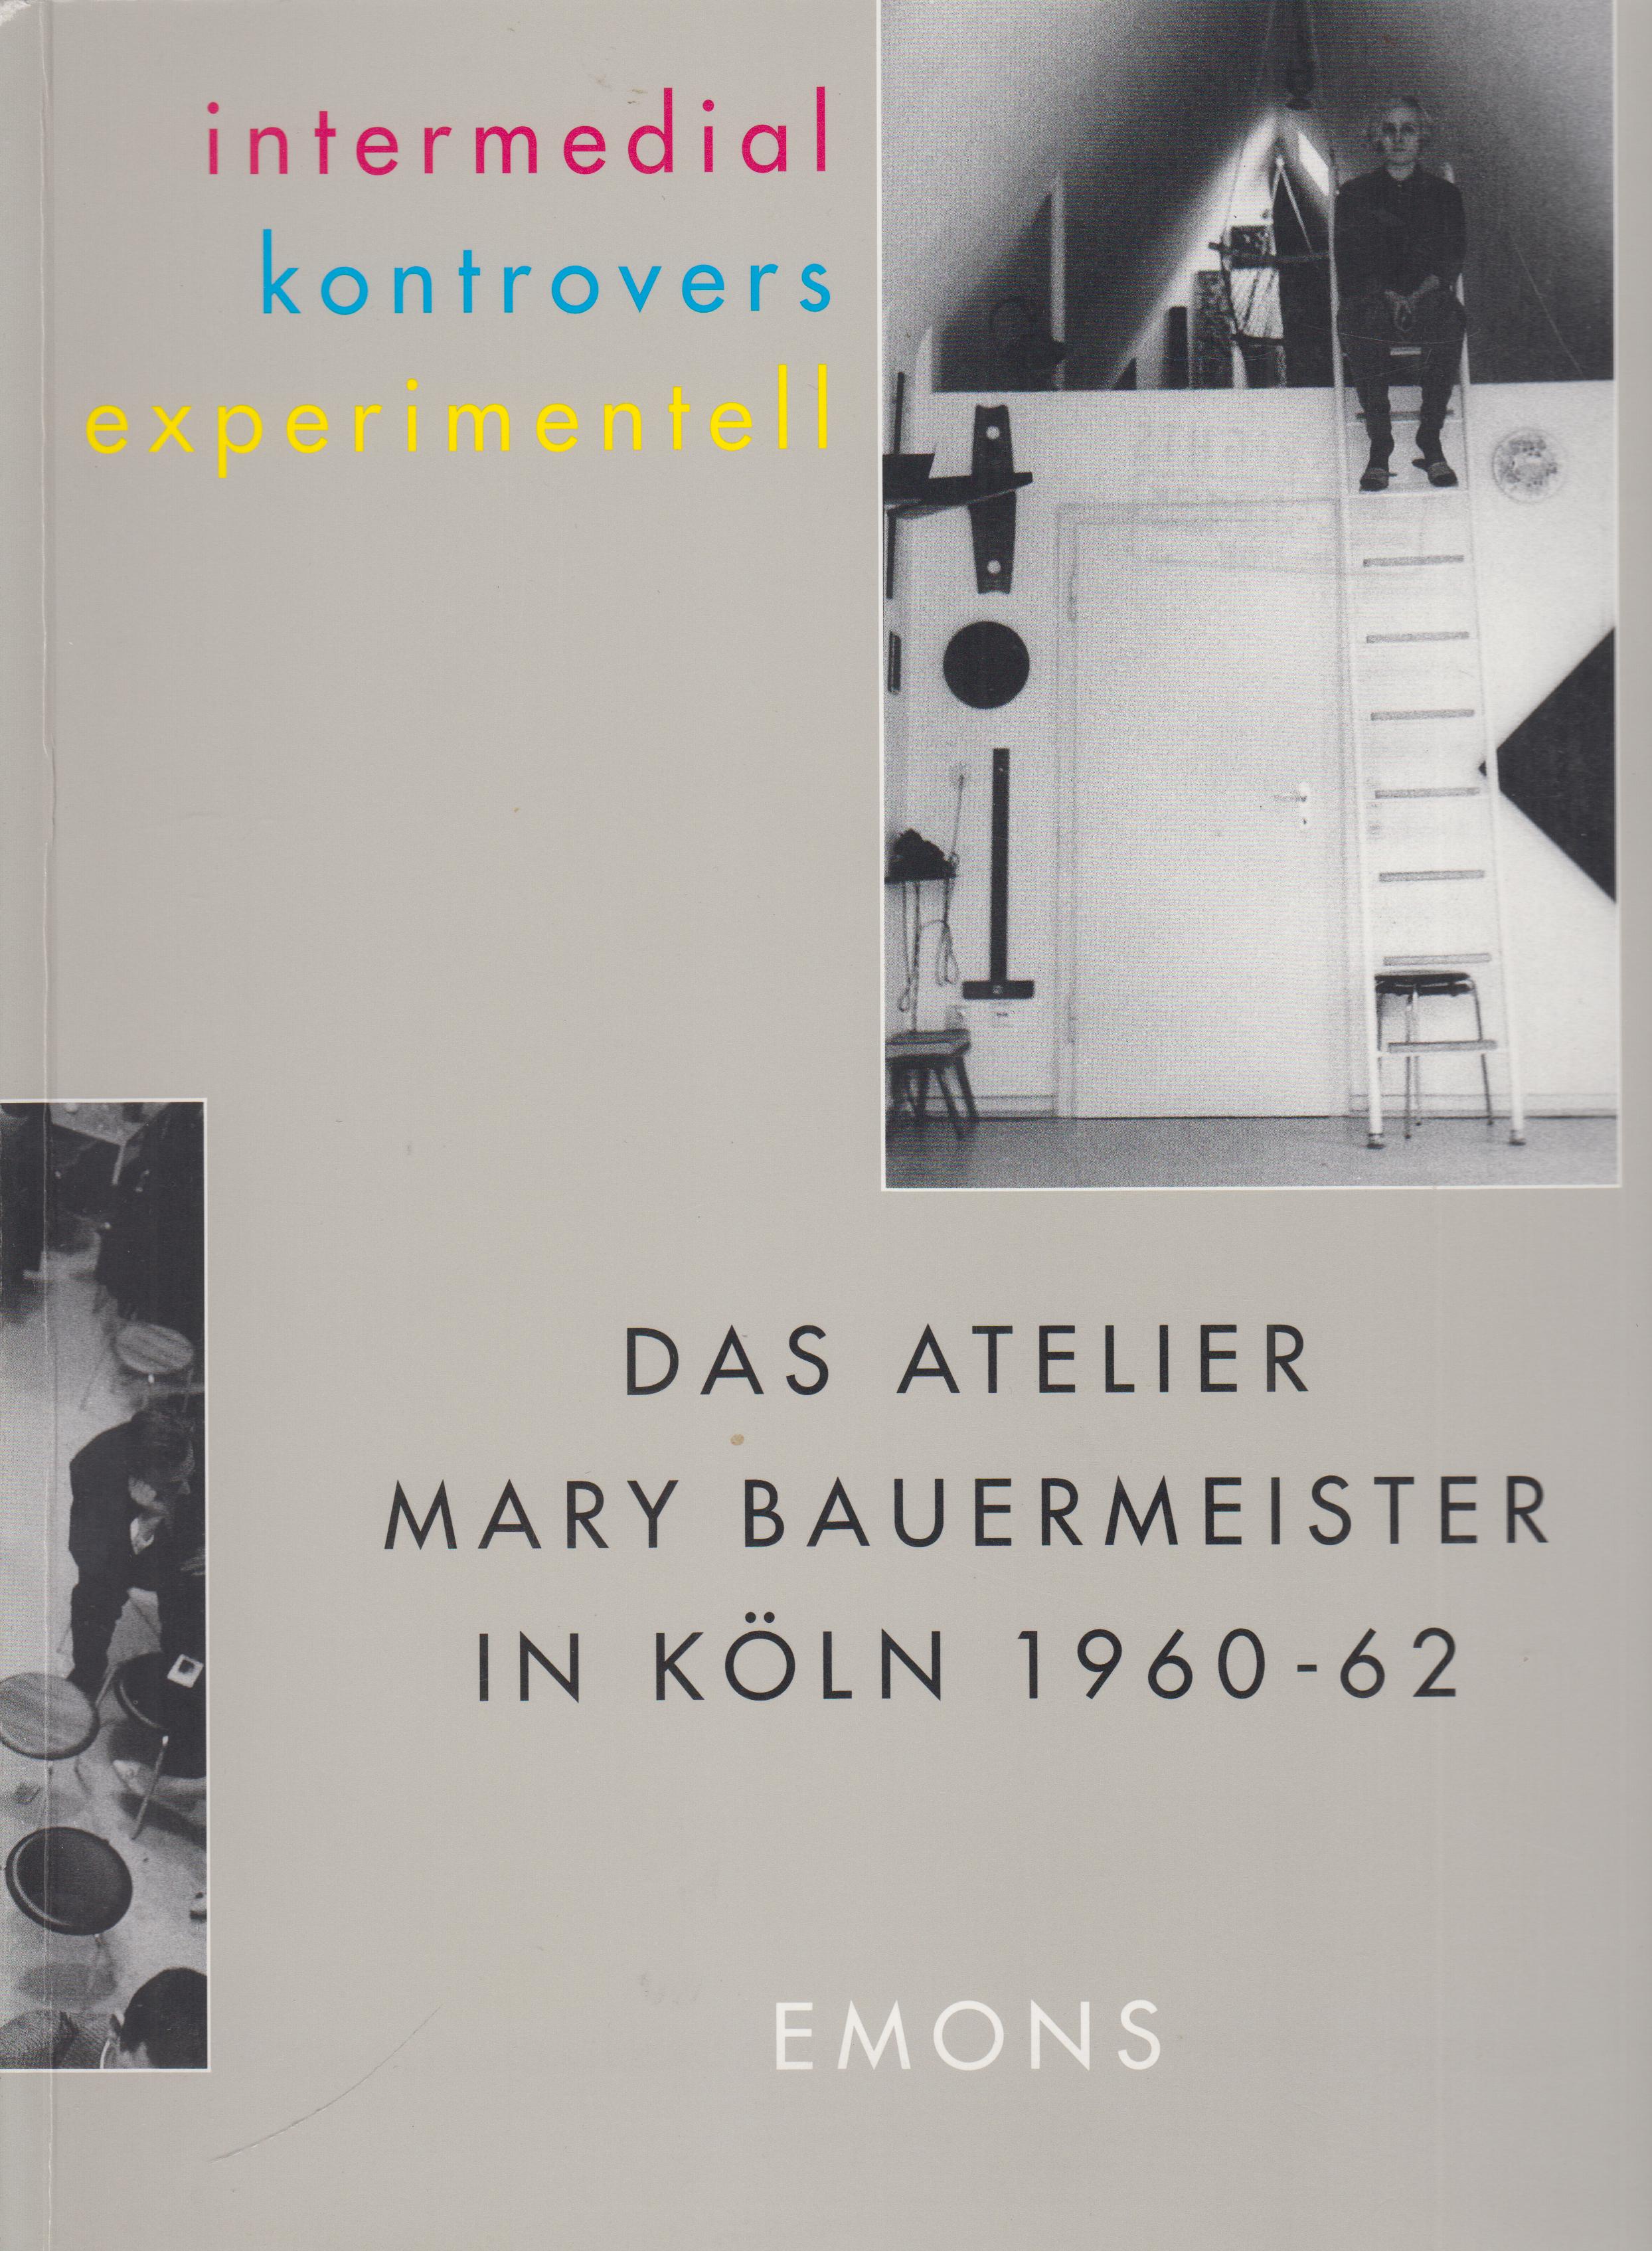 Intermedial, kontrovers, experimentell. Das Atelier Mary Bauermeister in Köln 1960-62.